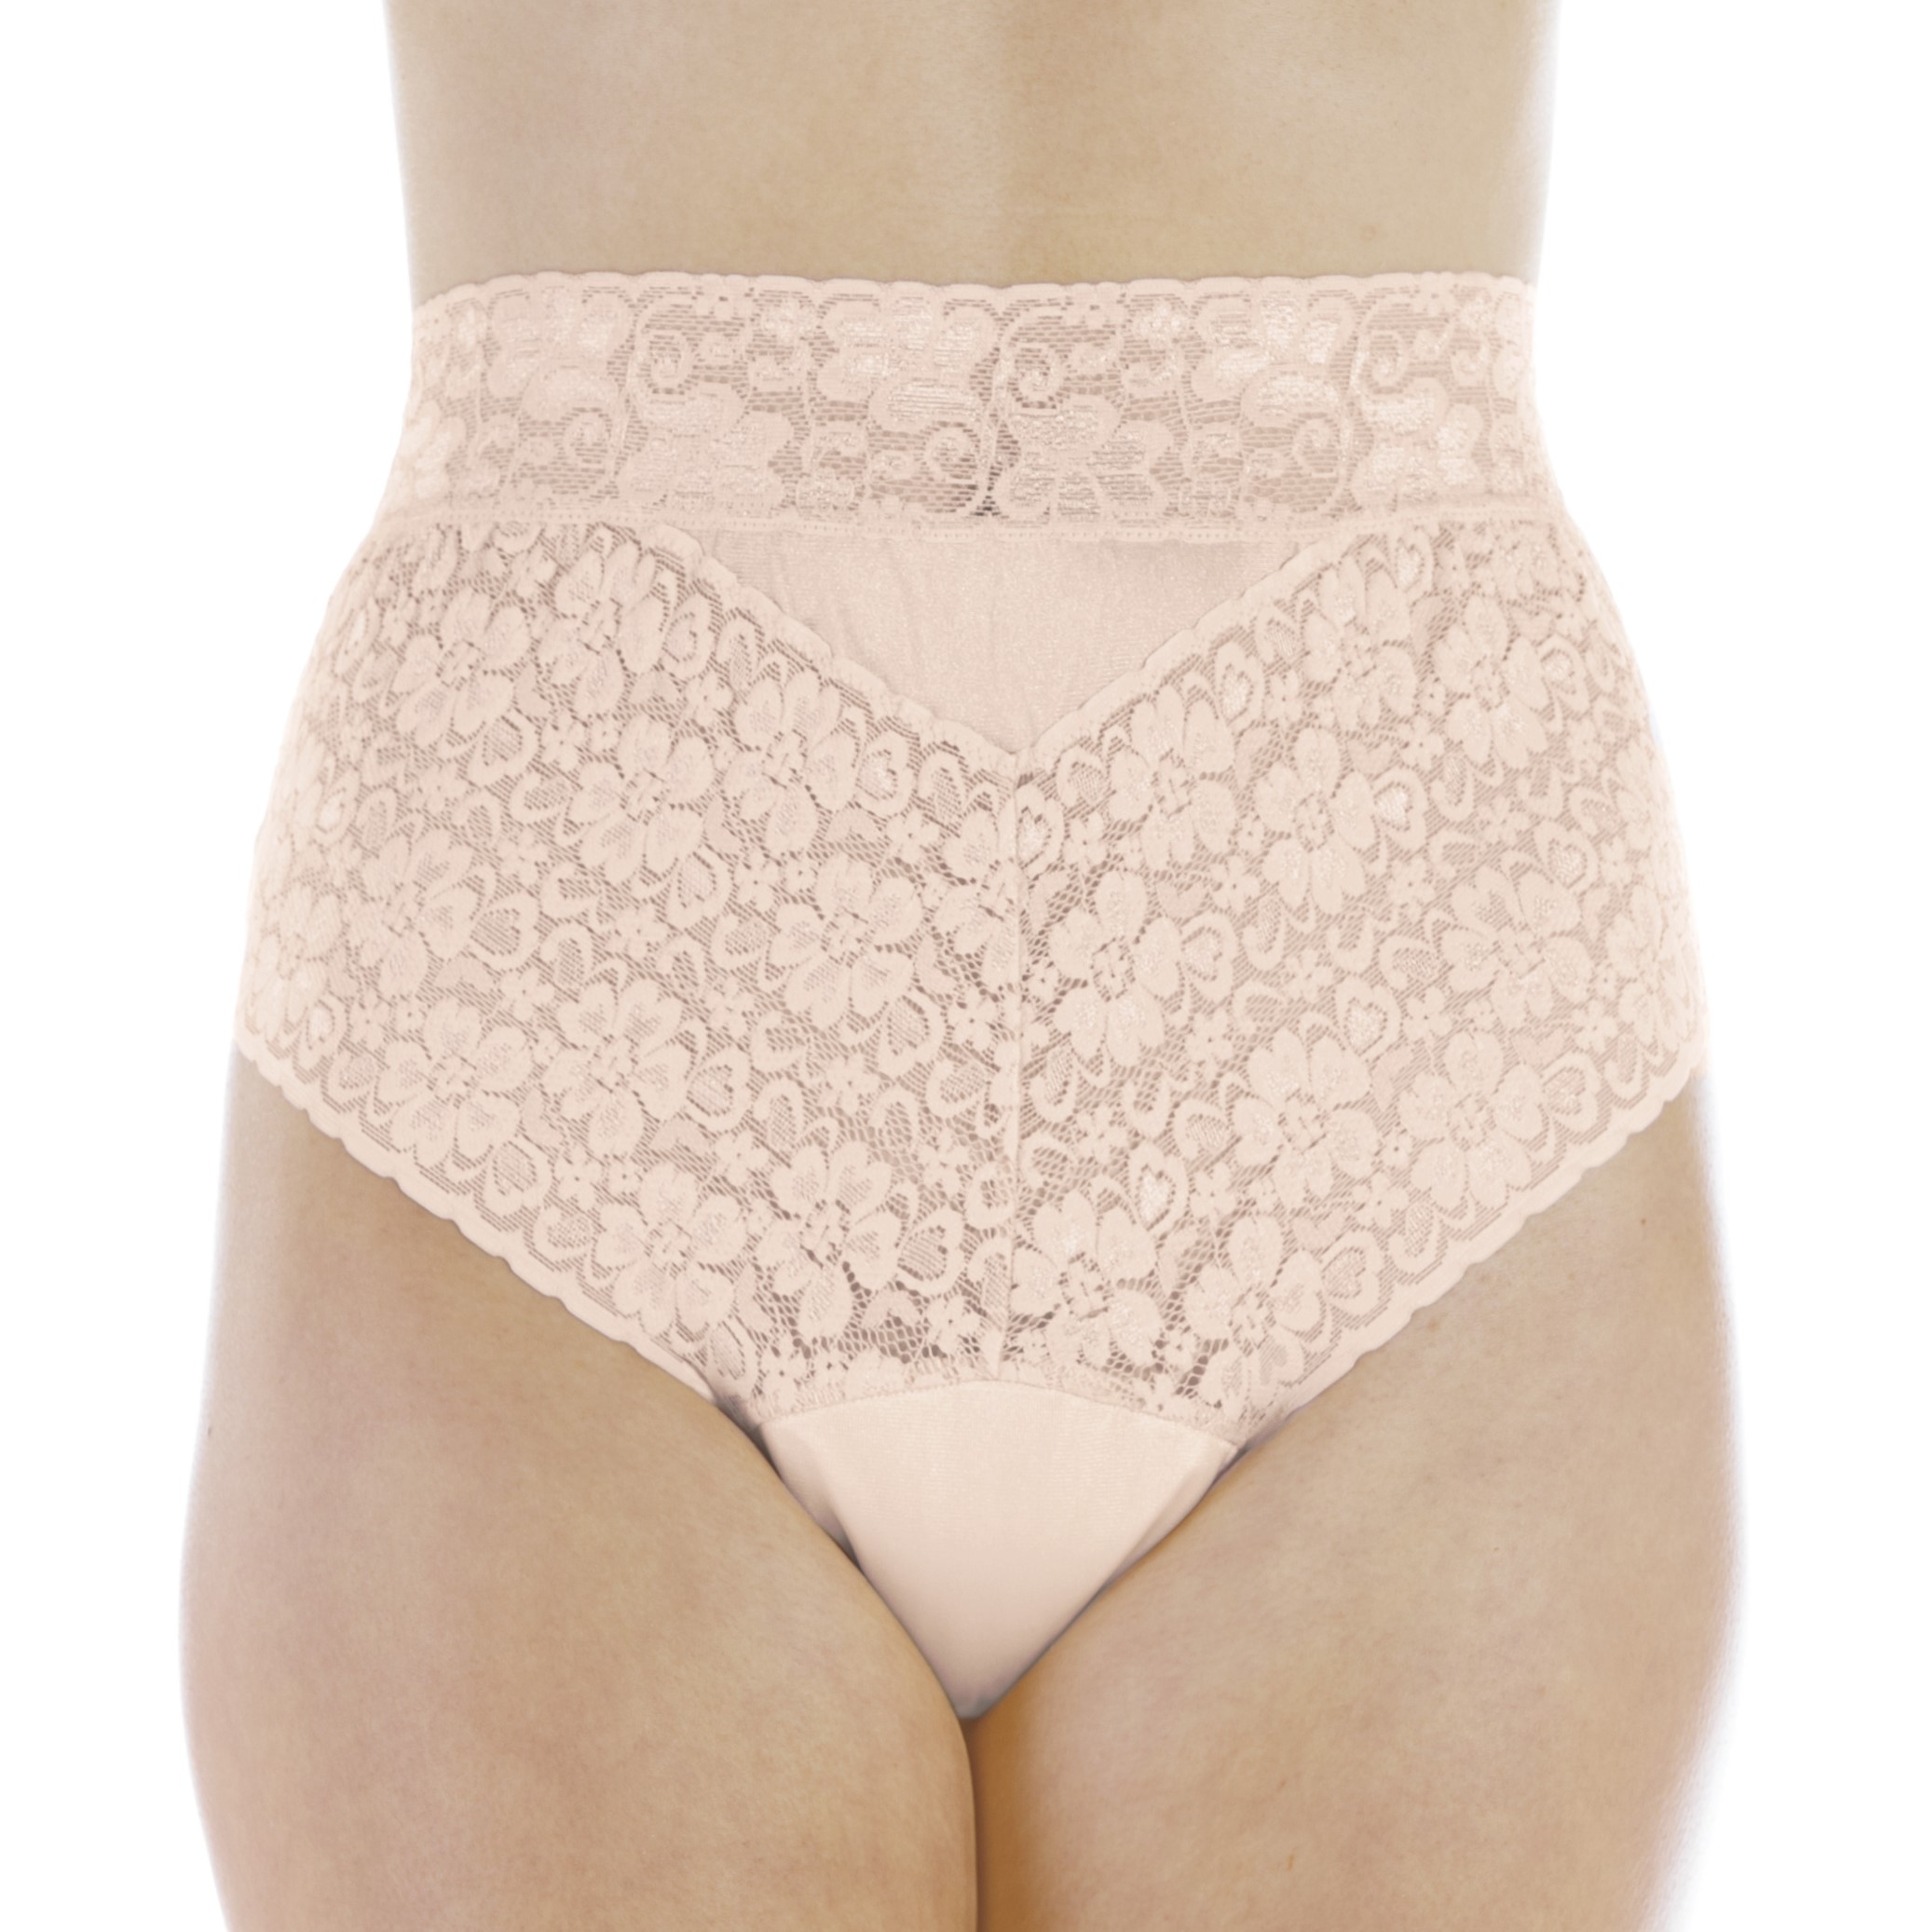 FINETOO Lace Panties Women - Vision 45 - Medium